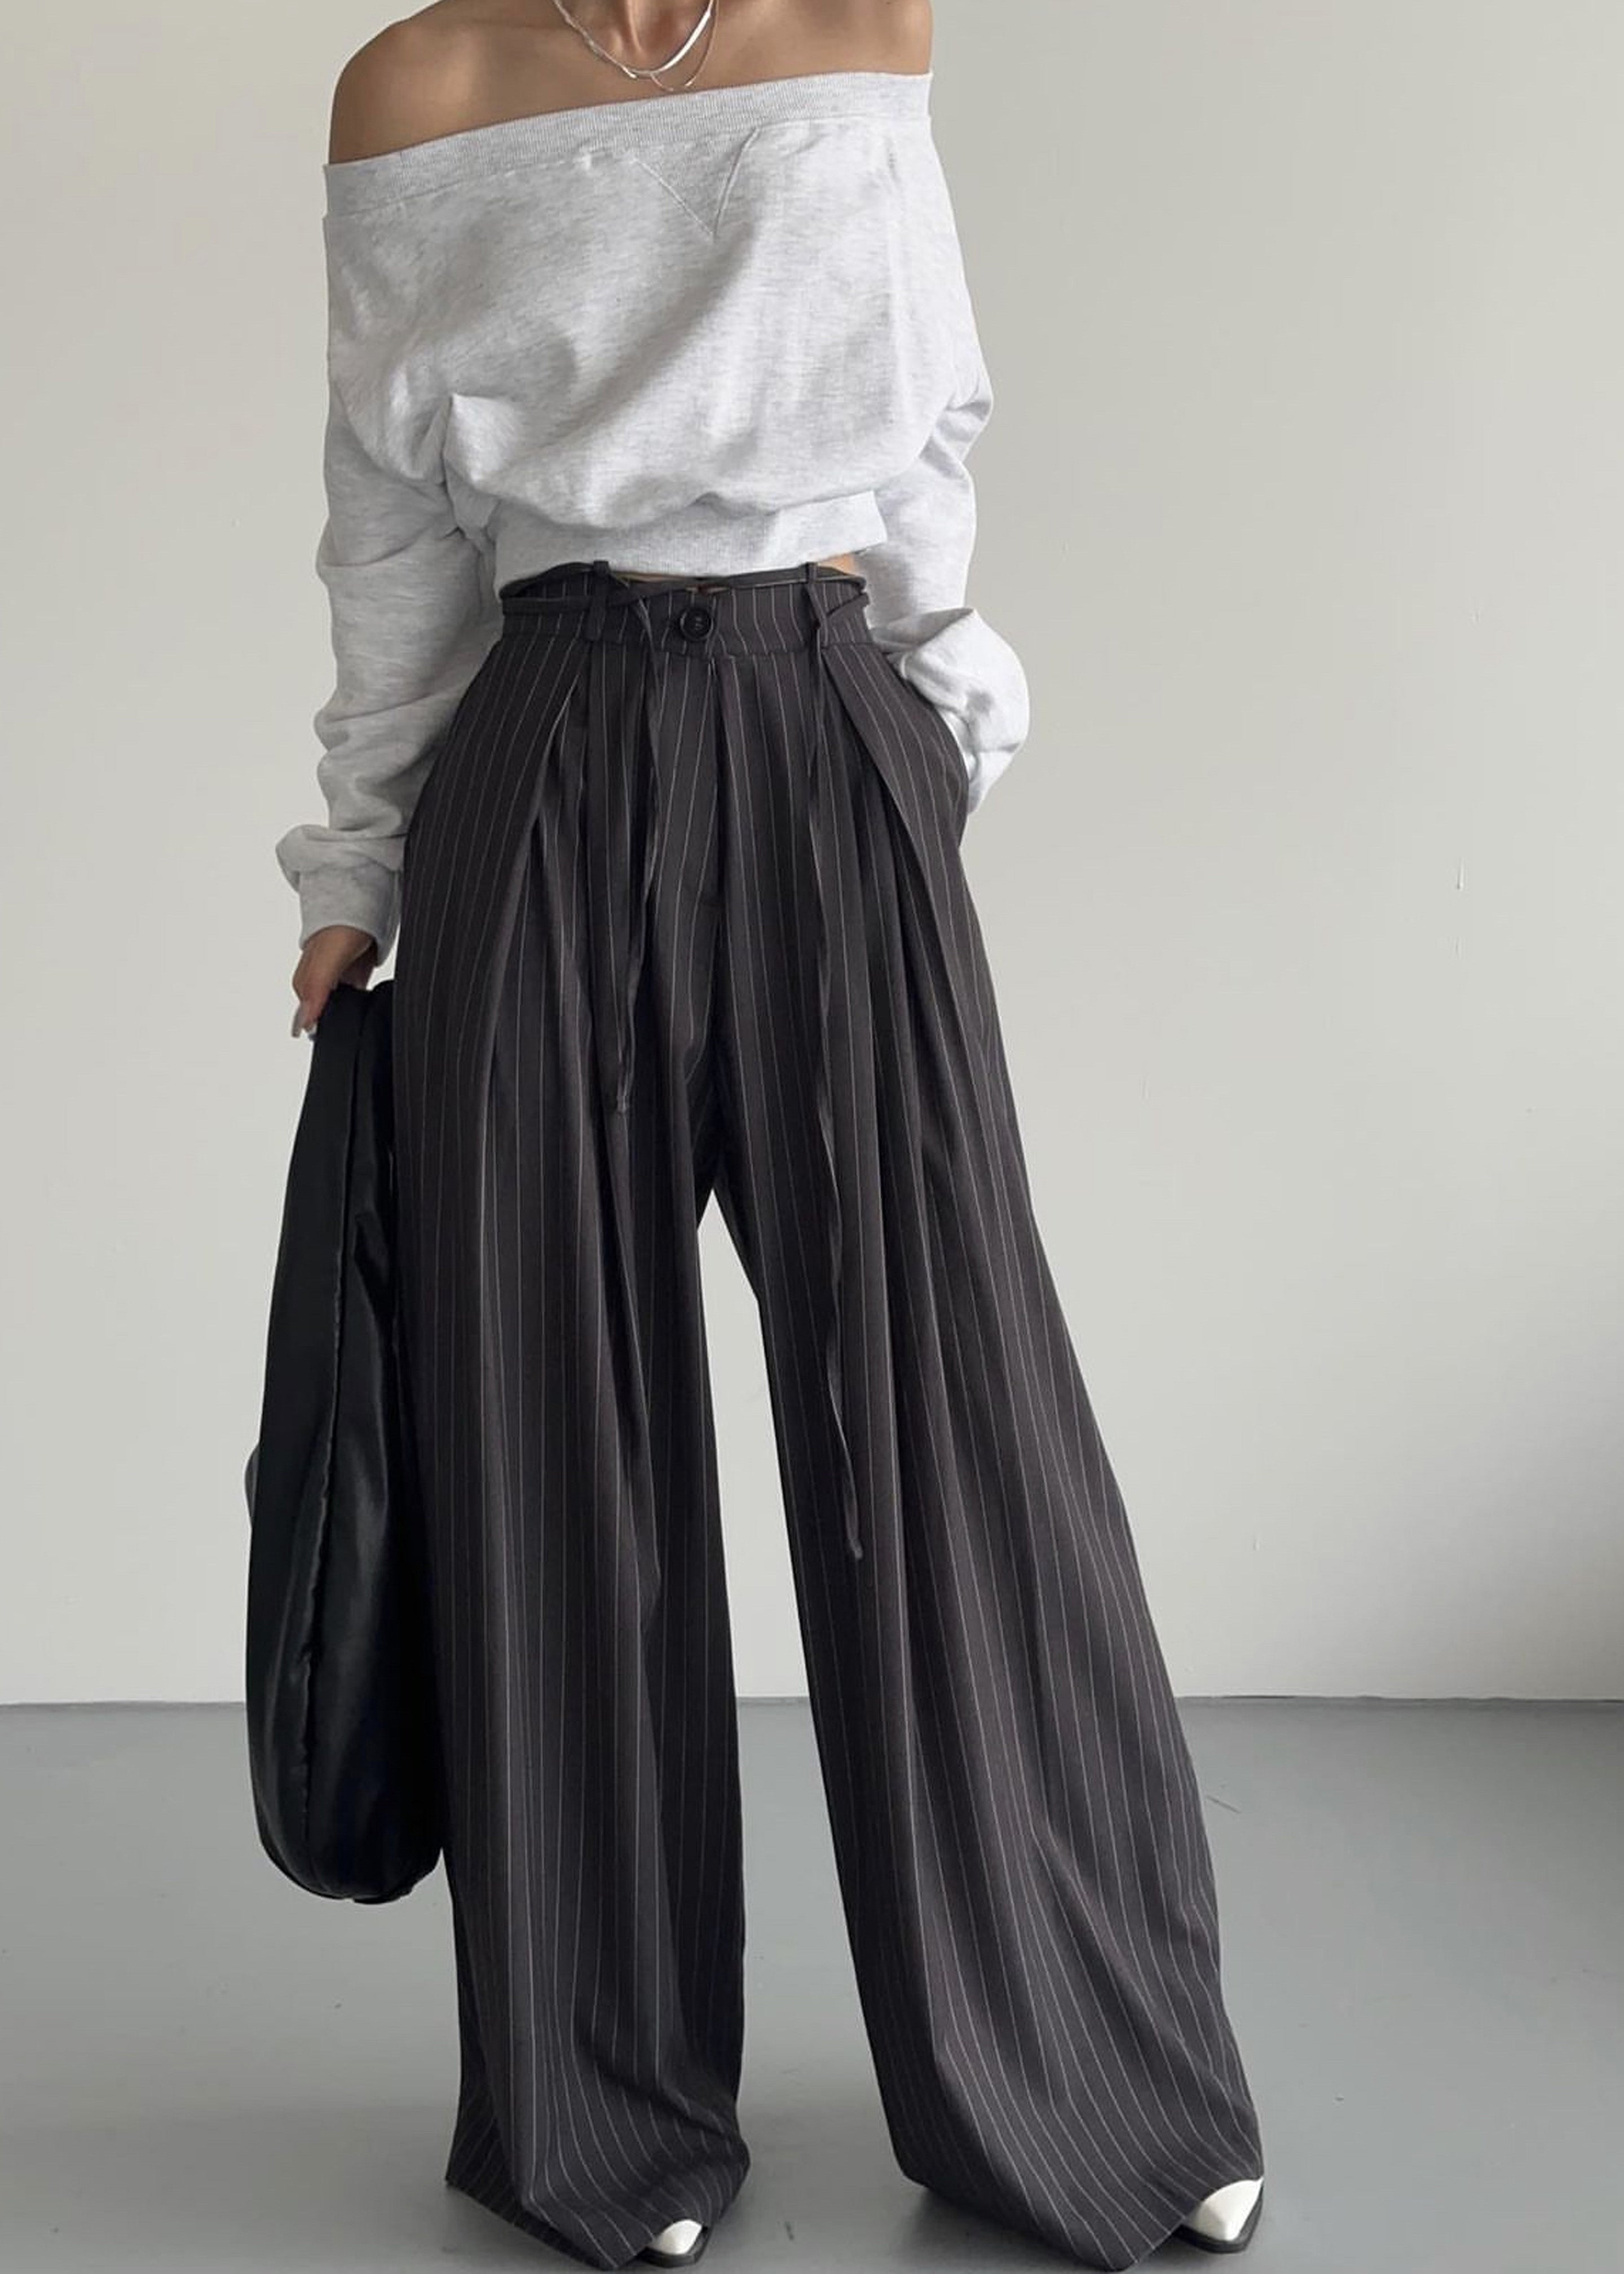 Haven Pants Grey/Pink Pinstripe